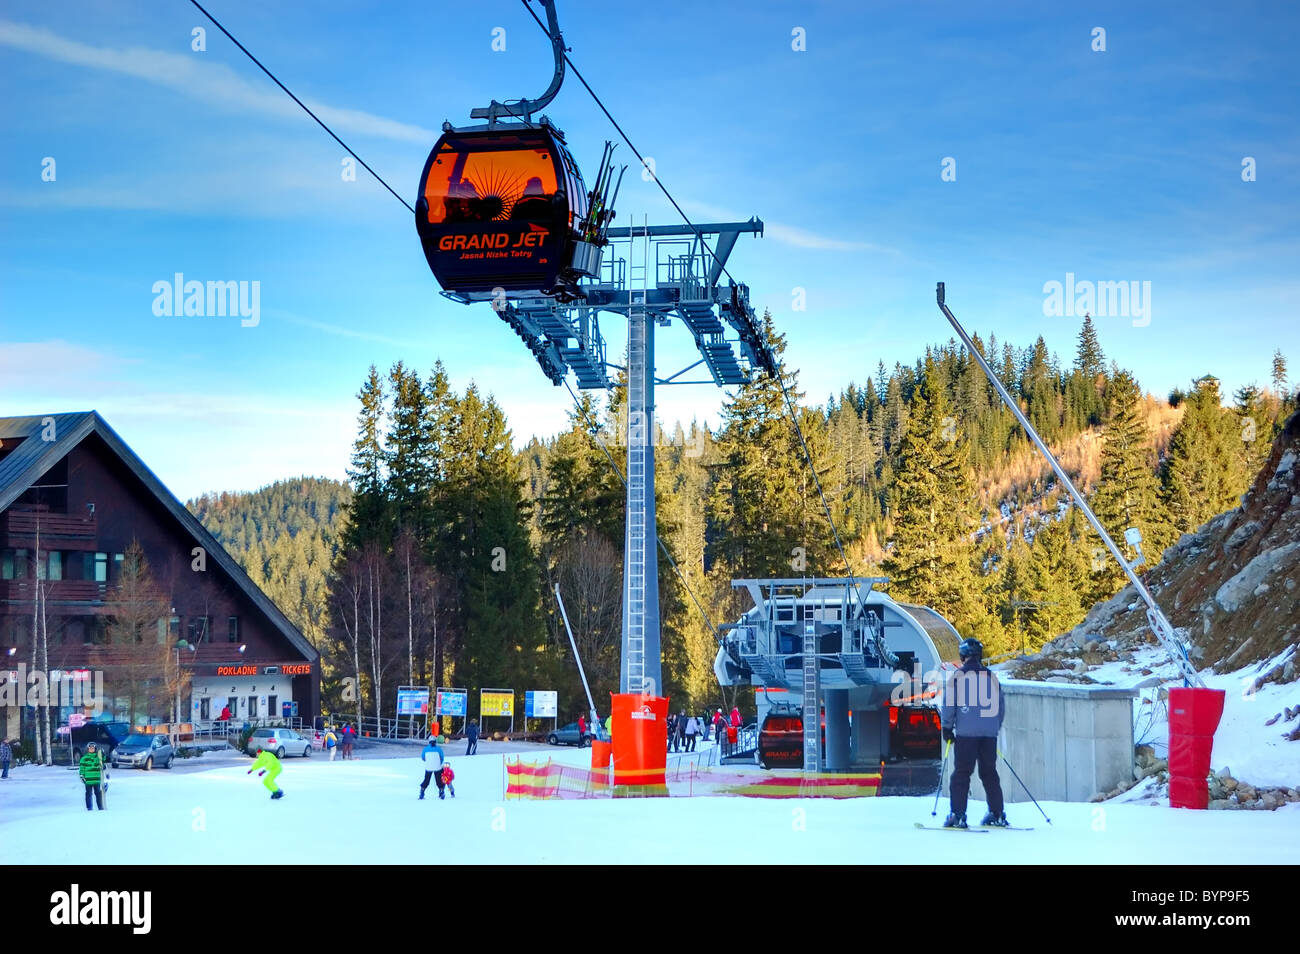 Jasna Slovakia Ski High Resolution Stock Photography and Images - Alamy